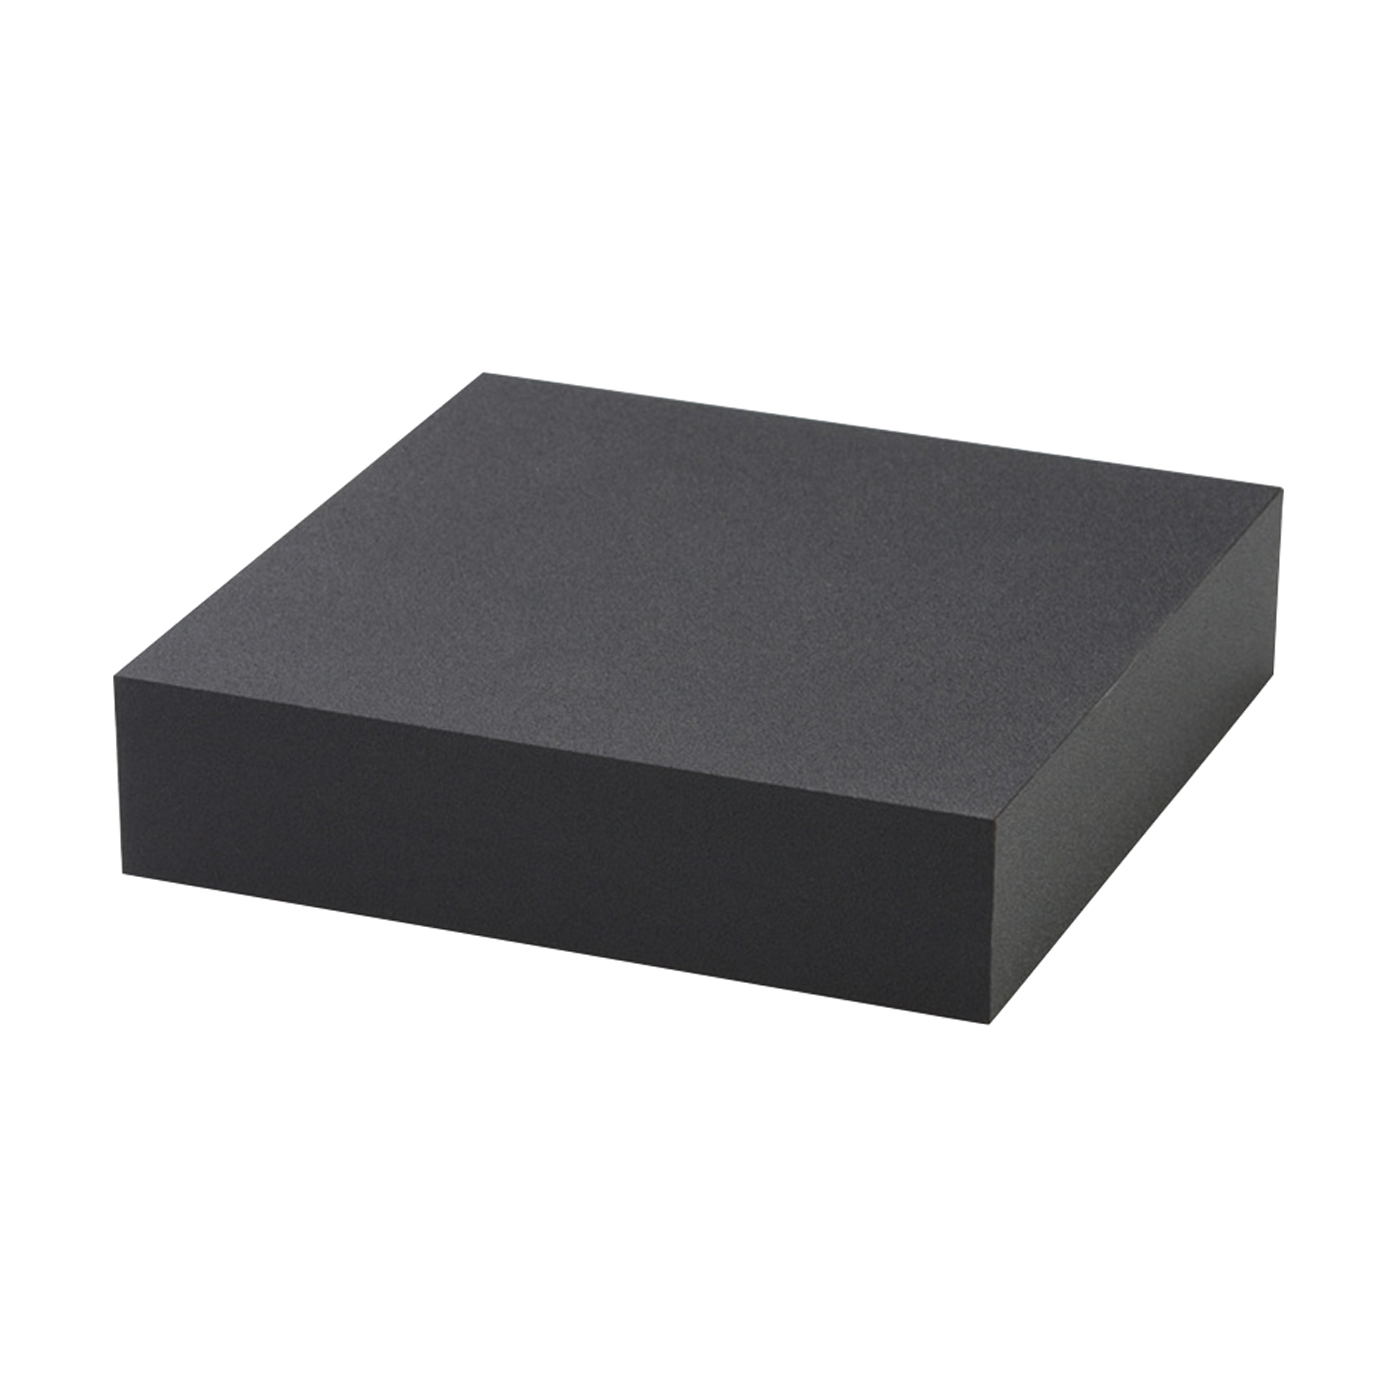 Jewellery Packaging "Blackbox", 170 x 170 x 40 mm - 1 piece